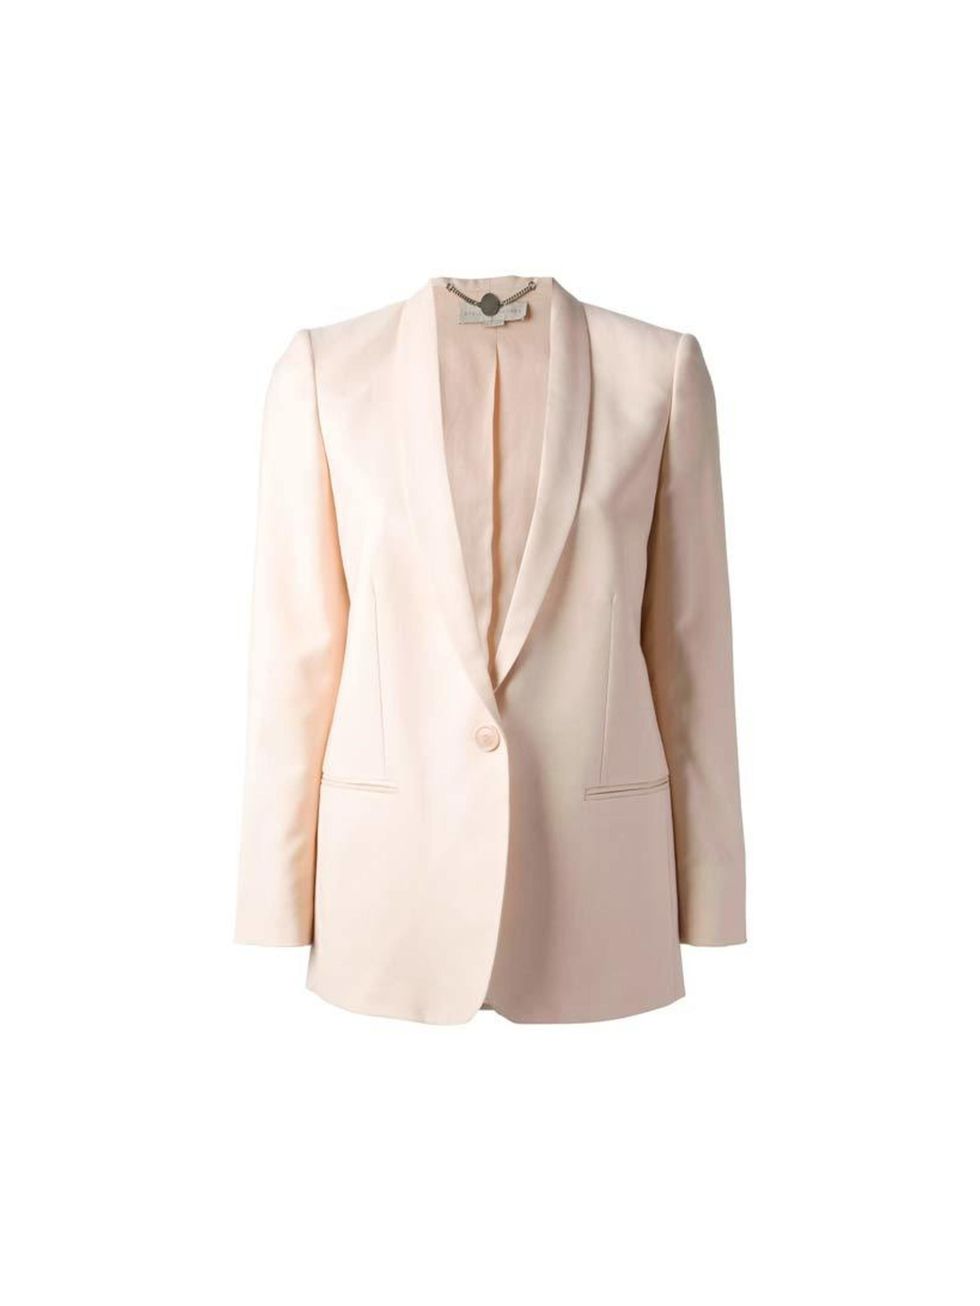 <p>A pastel blazer will add the elegant edge to the outfit,</p><p>Stella McCartney, £1000 available at <a href="http://www.farfetch.com/uk/shopping/women/stella-mccartney-mattea-jacket-item-10609765.aspx?storeid=9129&amp;ffref=lp_9_">Farfetch</a></p><p><e